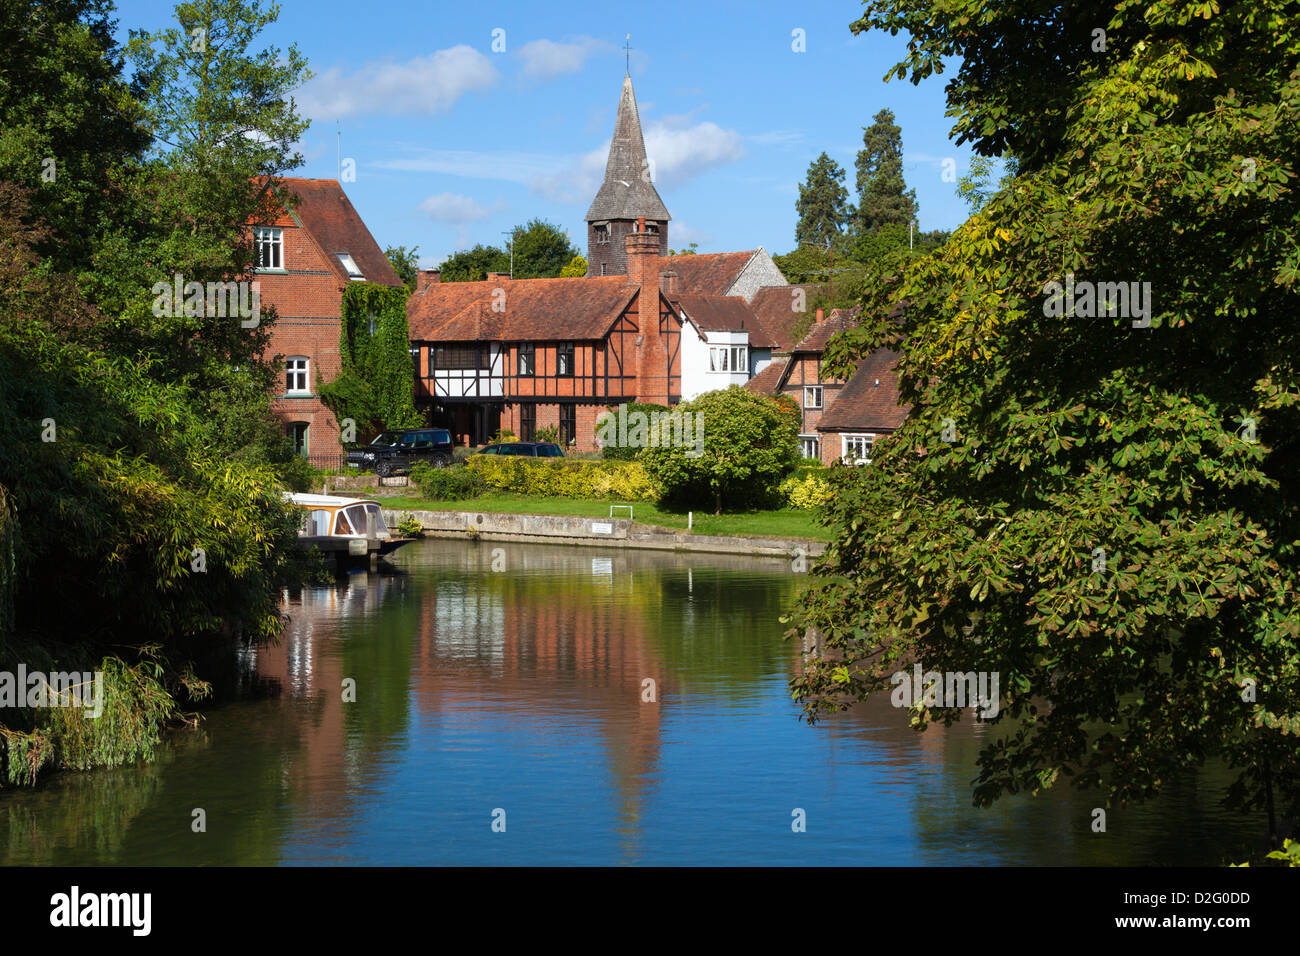 Village beside River Thames Stock Photo